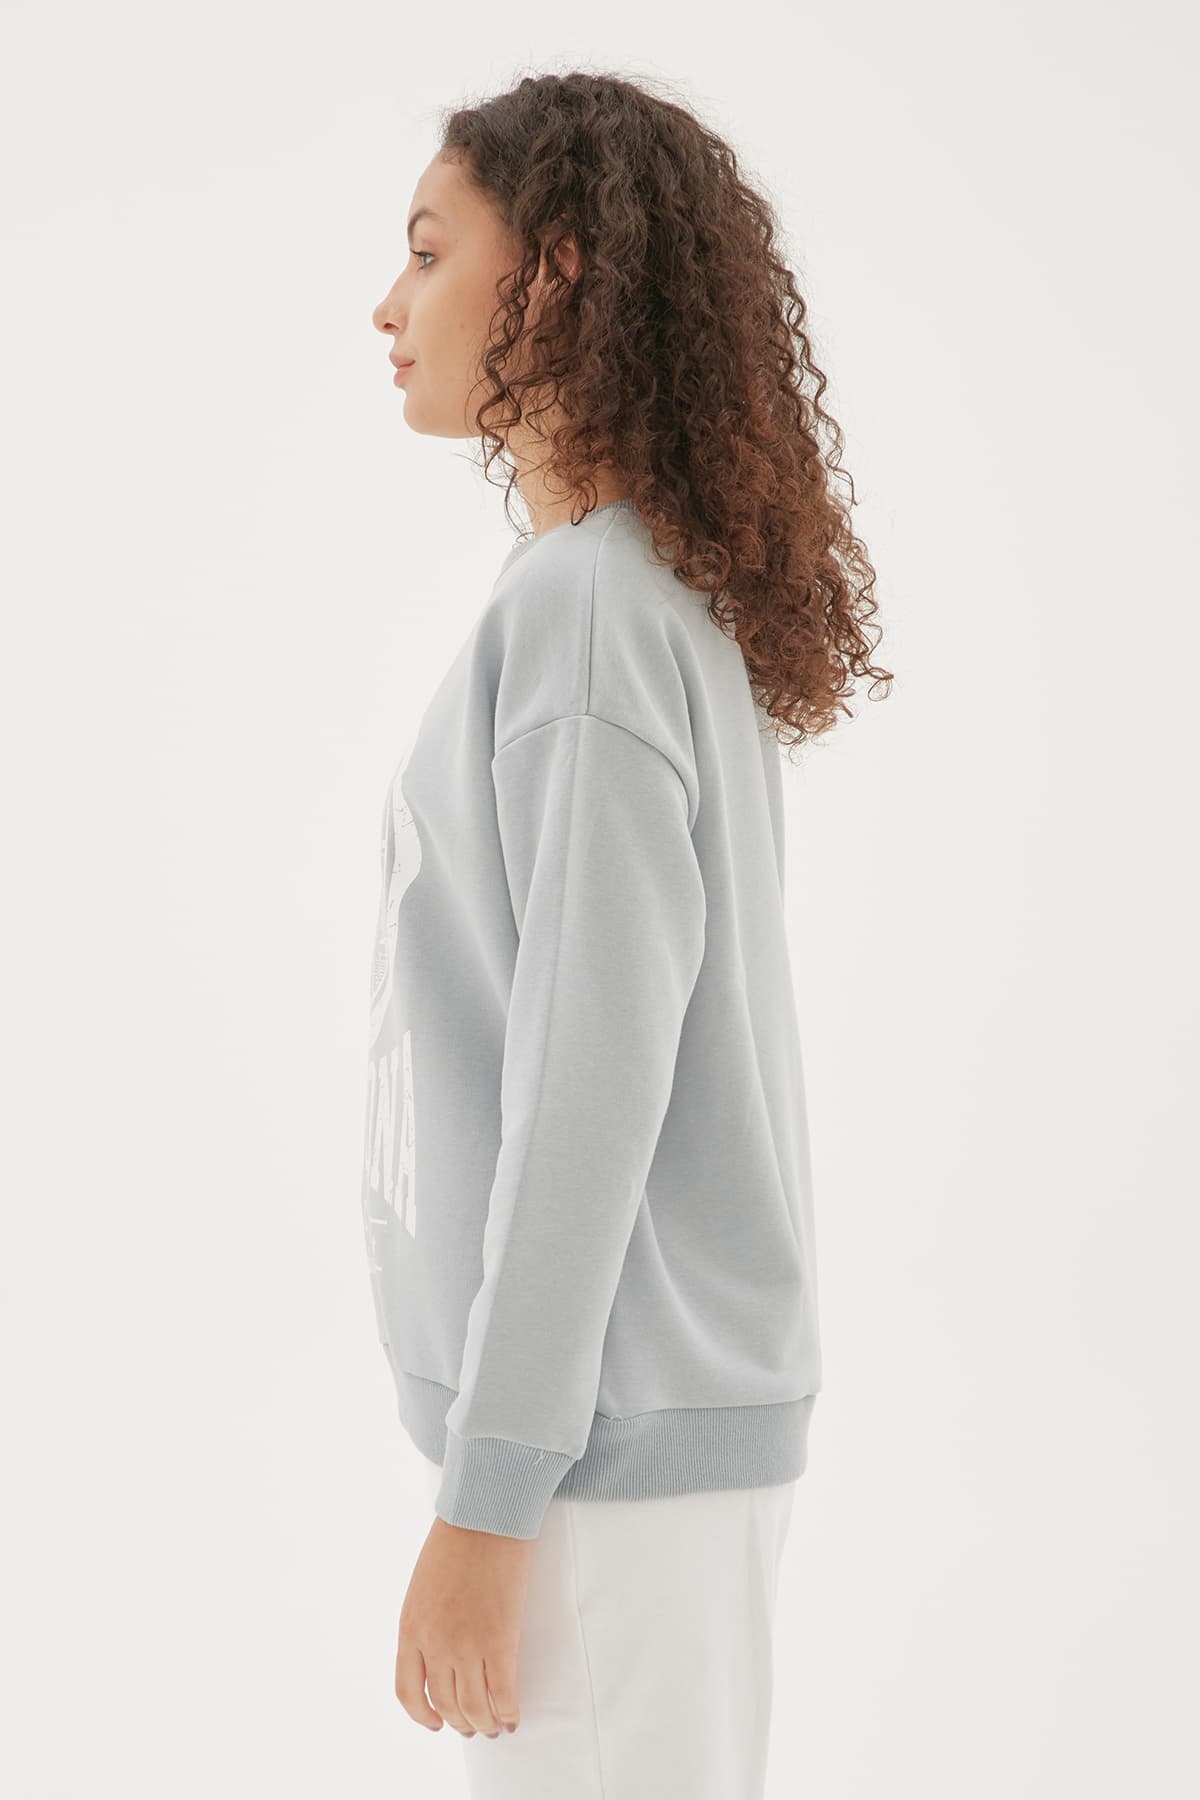 Baskılı Sweatshirt Gri / Grey | Fashion Friends